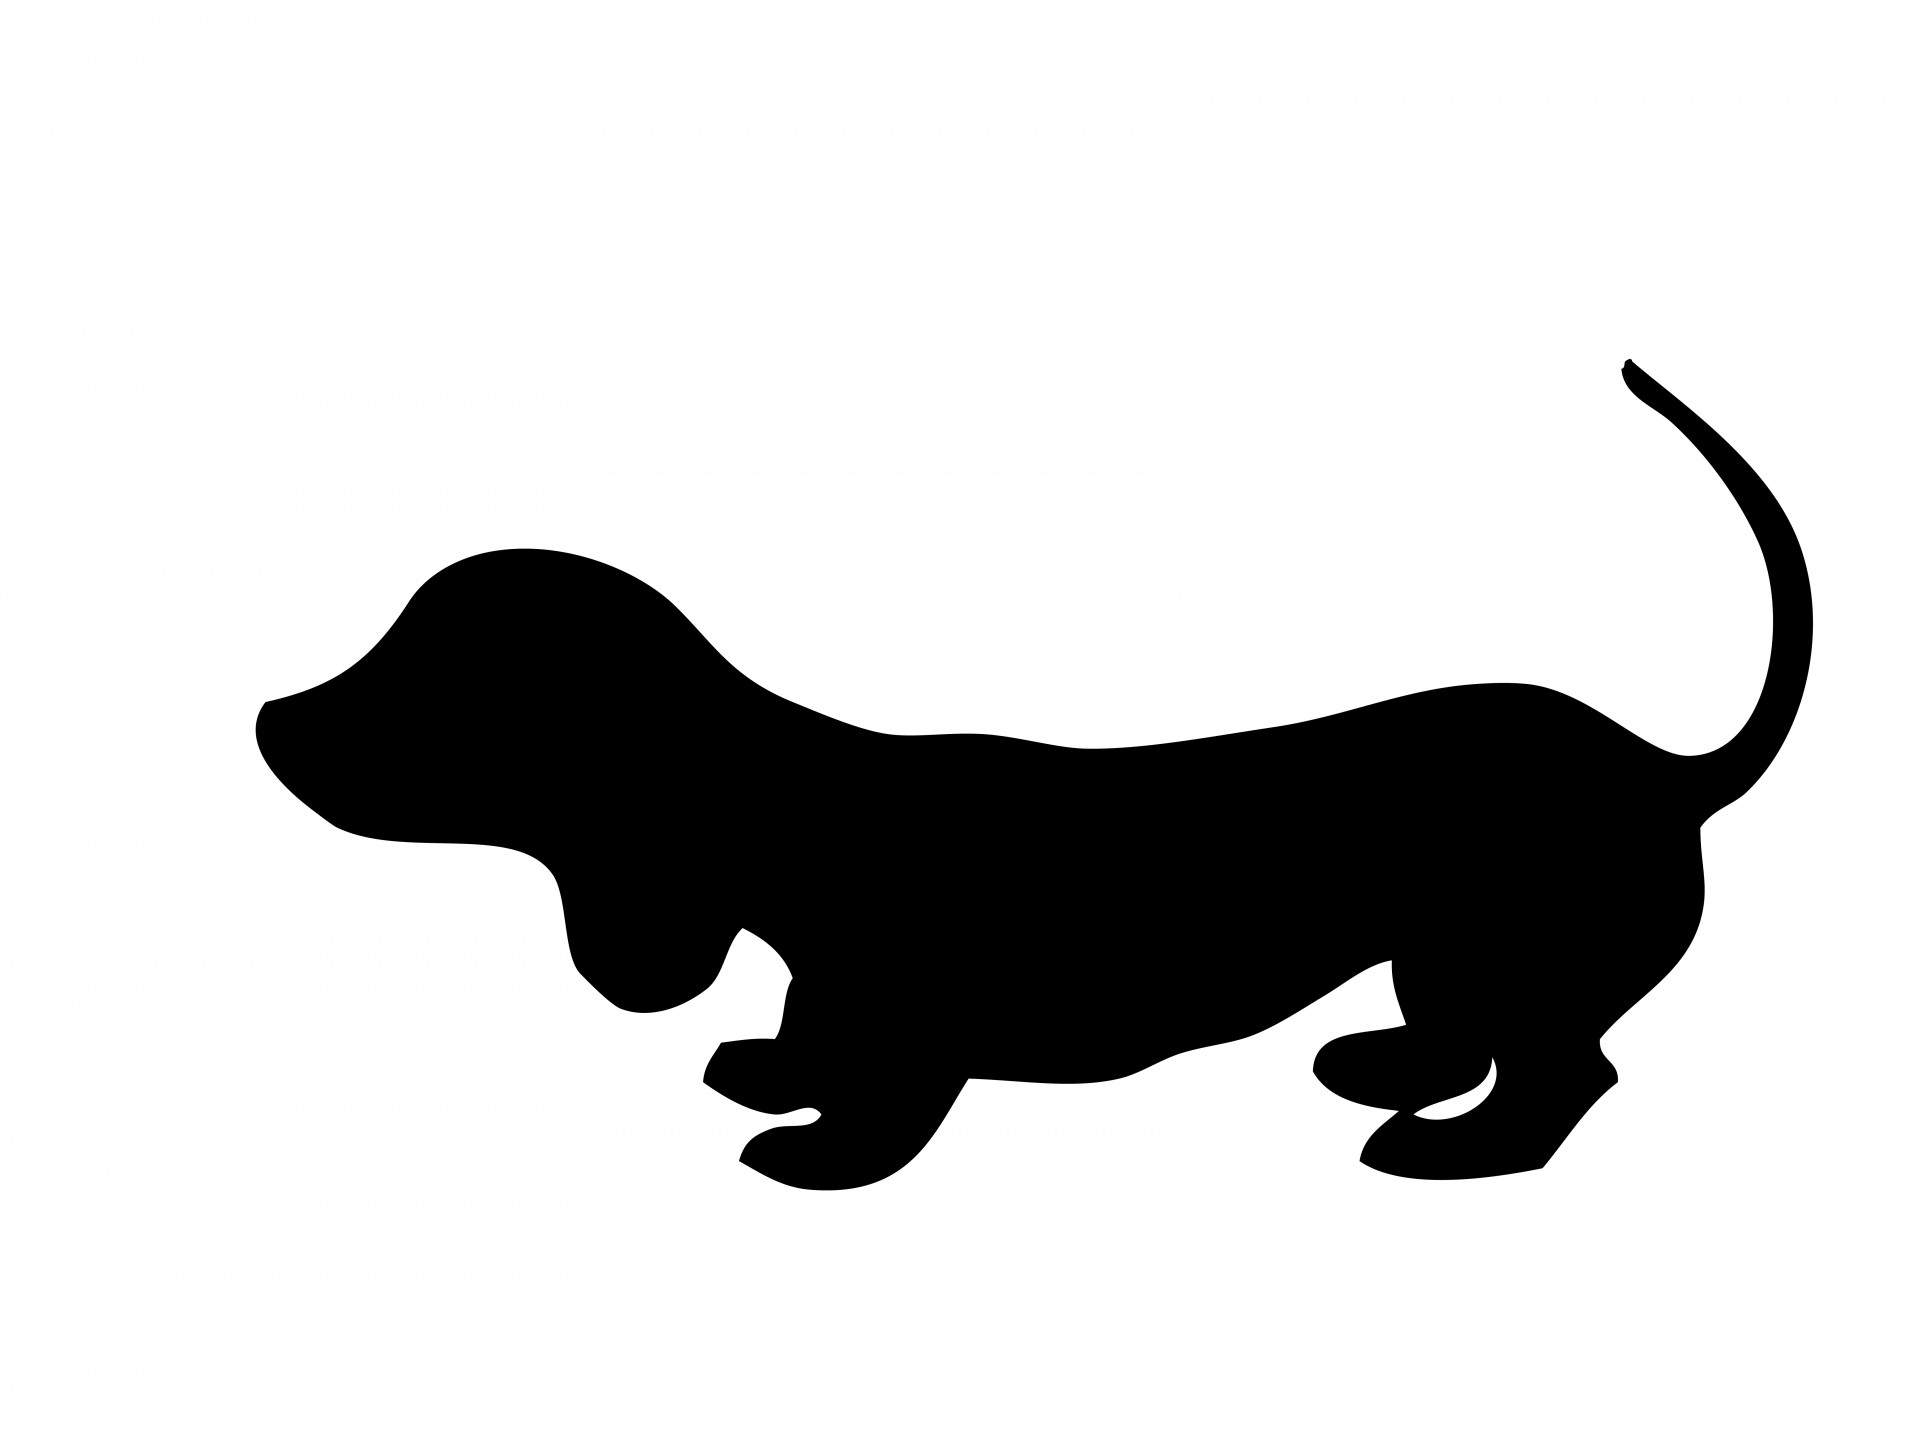 Black silhouette of a cute dachshund puppy dog illustration